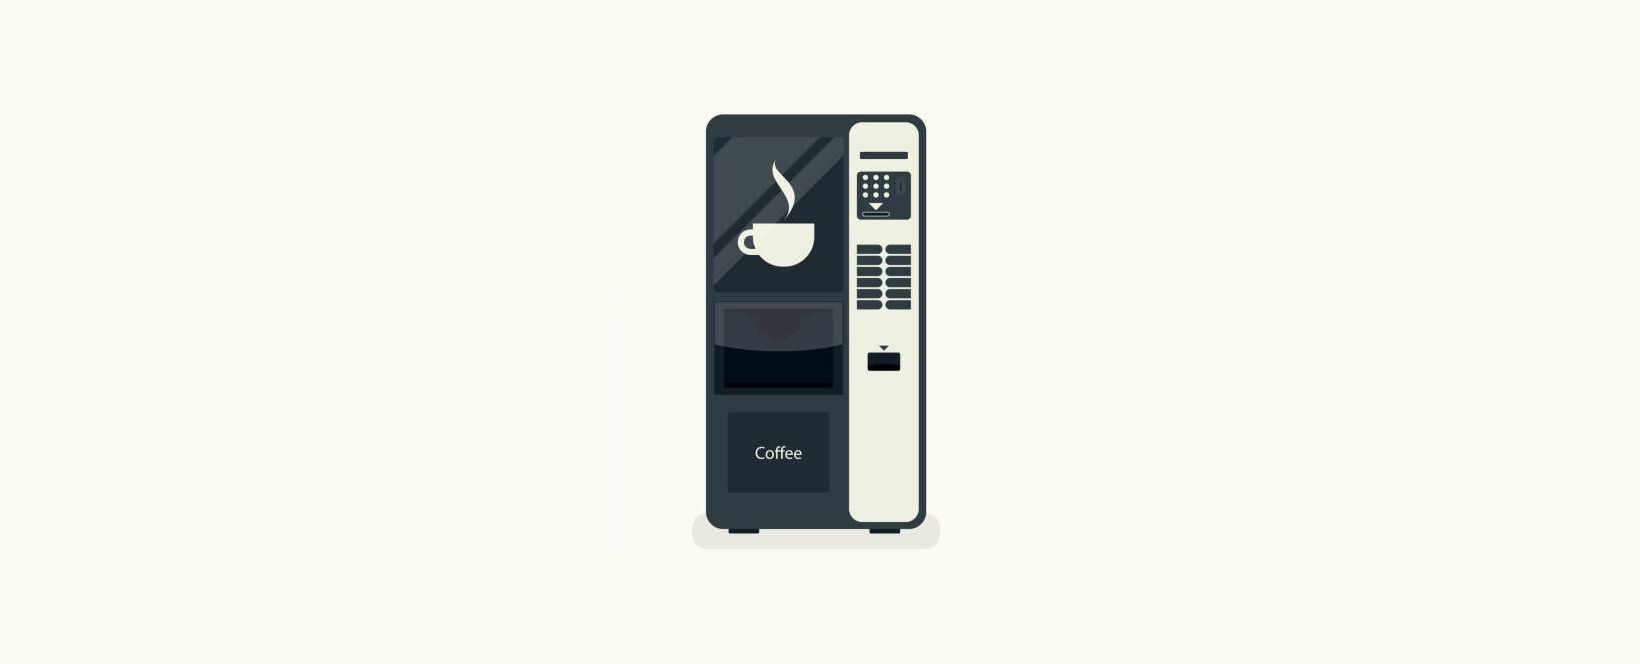 A Coffee Vending Machine Illustration